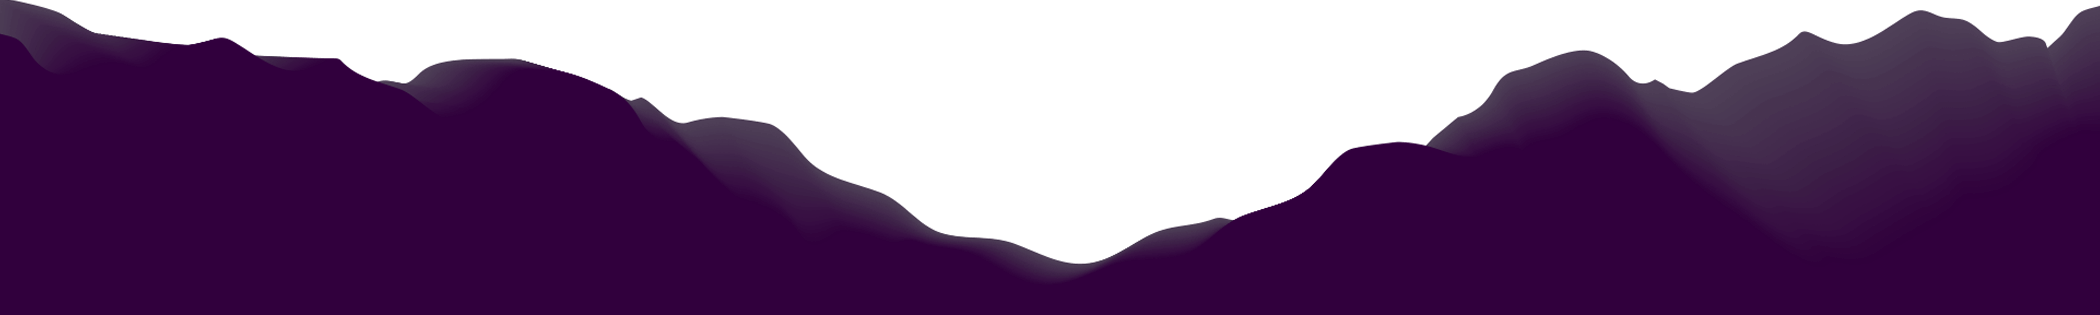 https://sulatastarot.com/wp-content/uploads/2018/05/purple_light_top_divider.png